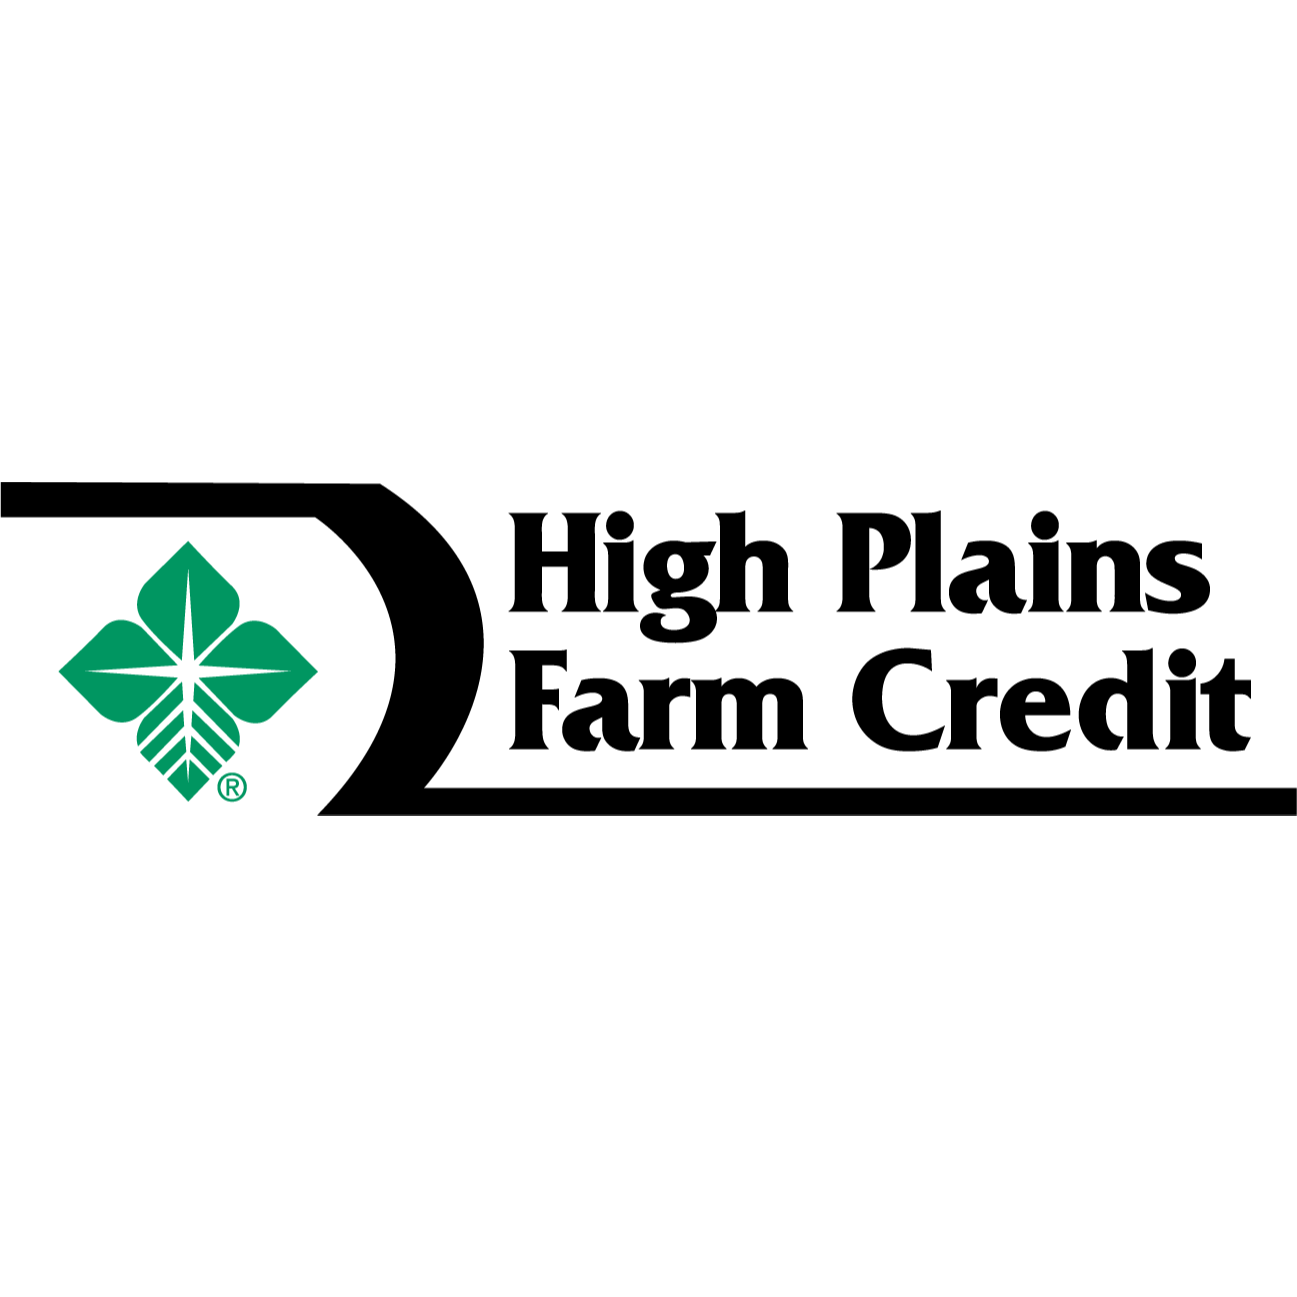 High Plains Farm Credit - Russell, KS 67665 - (620)910-7107 | ShowMeLocal.com